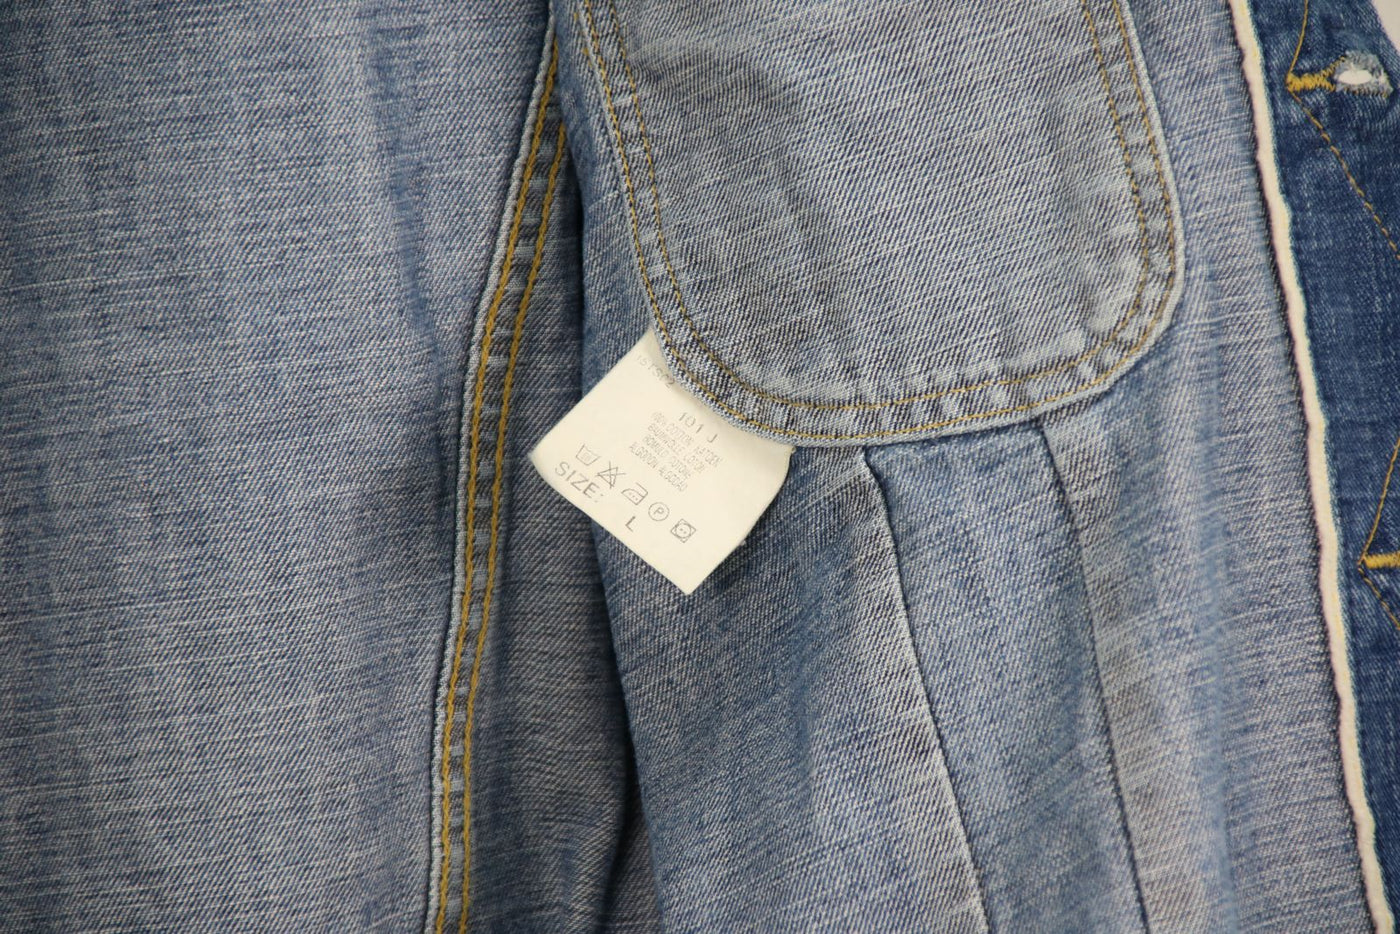 Lee 101-5 Giacca di Jeans Vintage Cimosa Taglia L Unisex